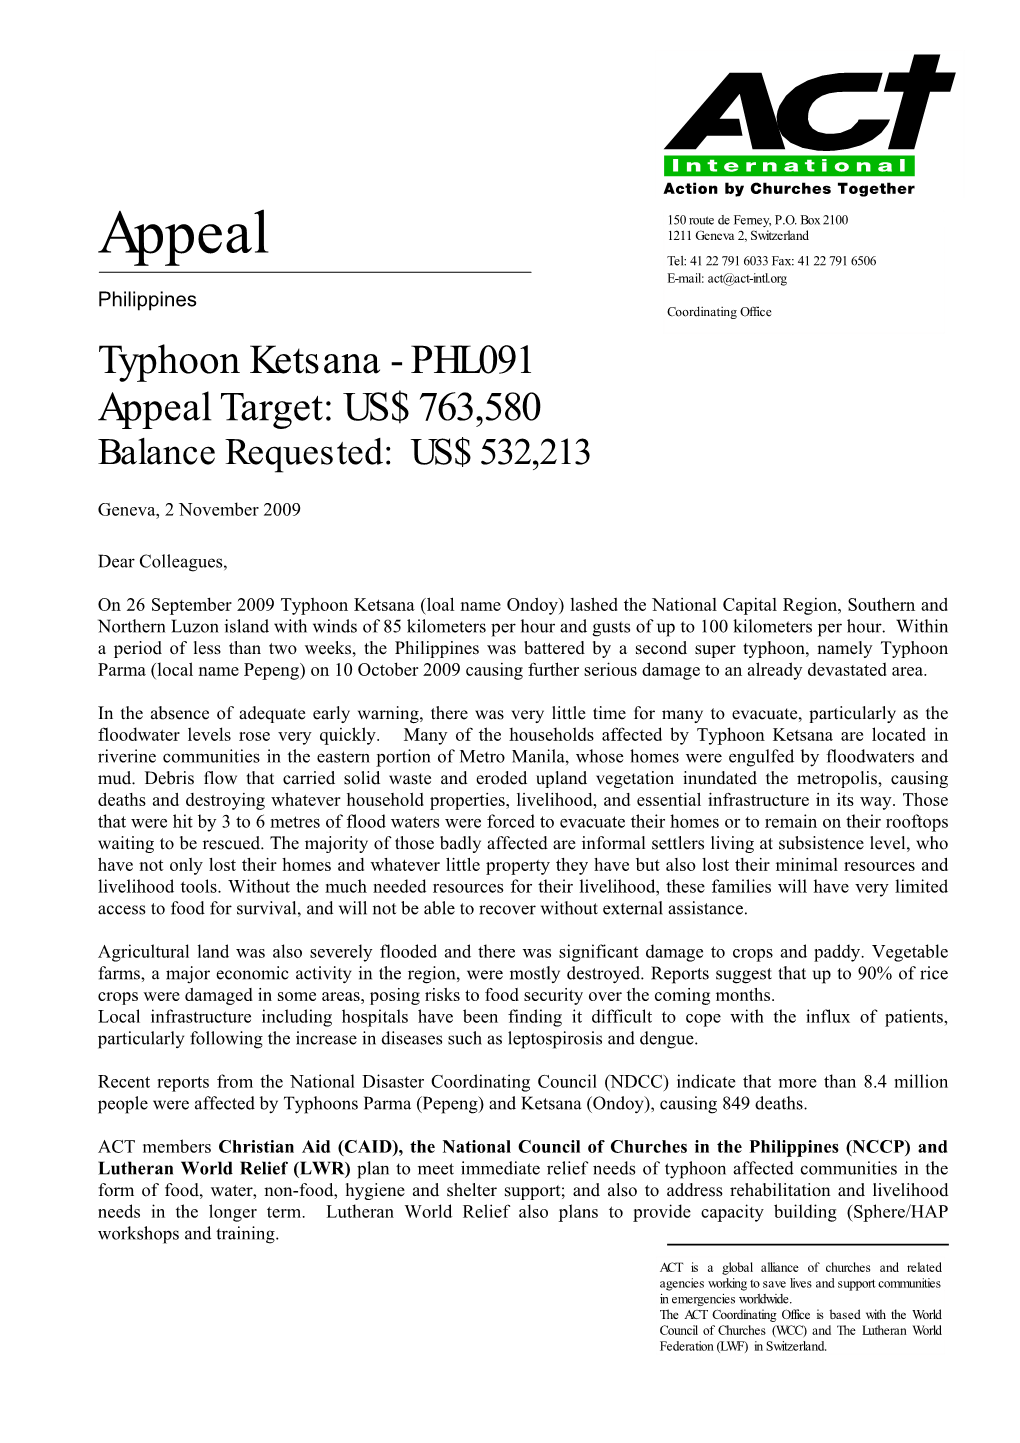 Typhoon Ketsana - PHL091 Appeal Target: US$ 763,580 Balance Requested: US$ 532,213